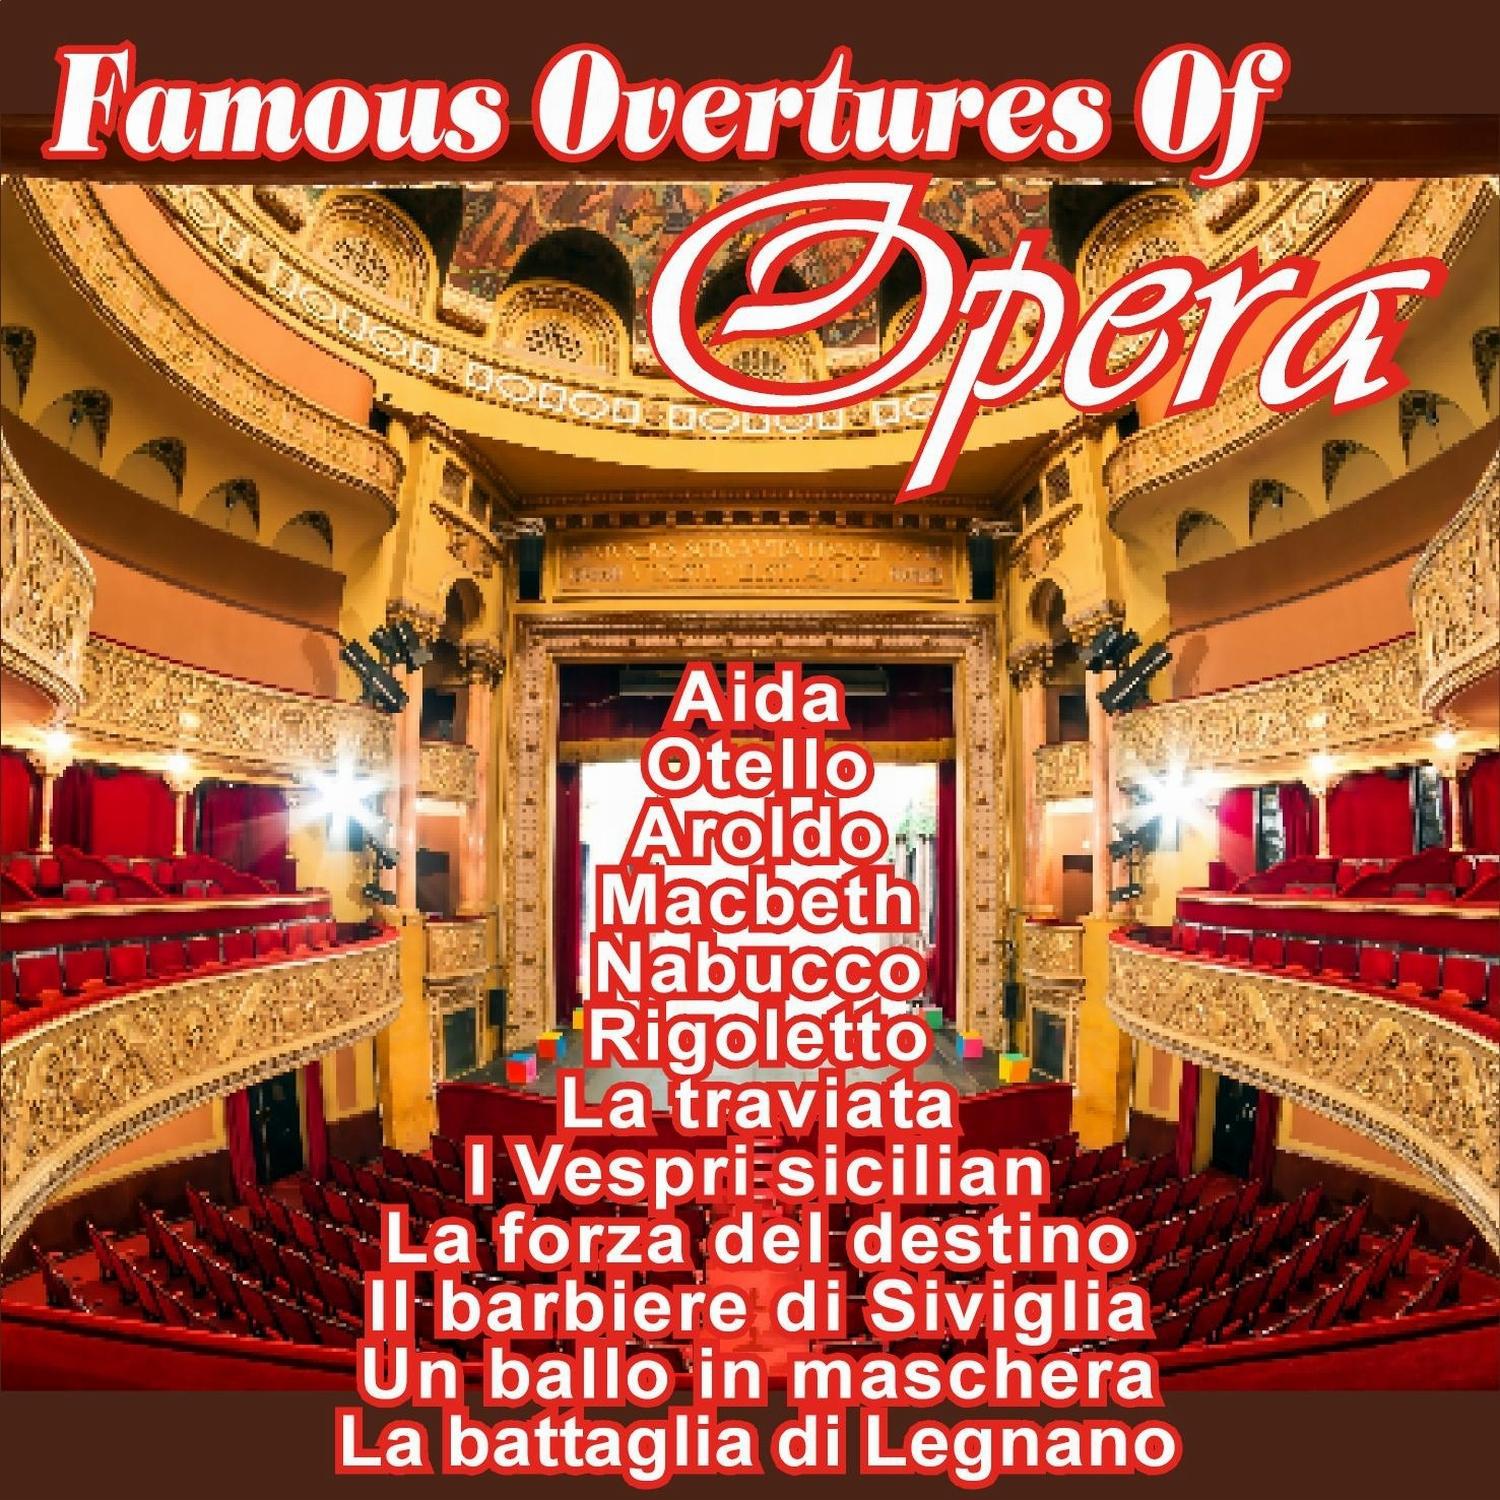 I Vespri sicilian: Overture